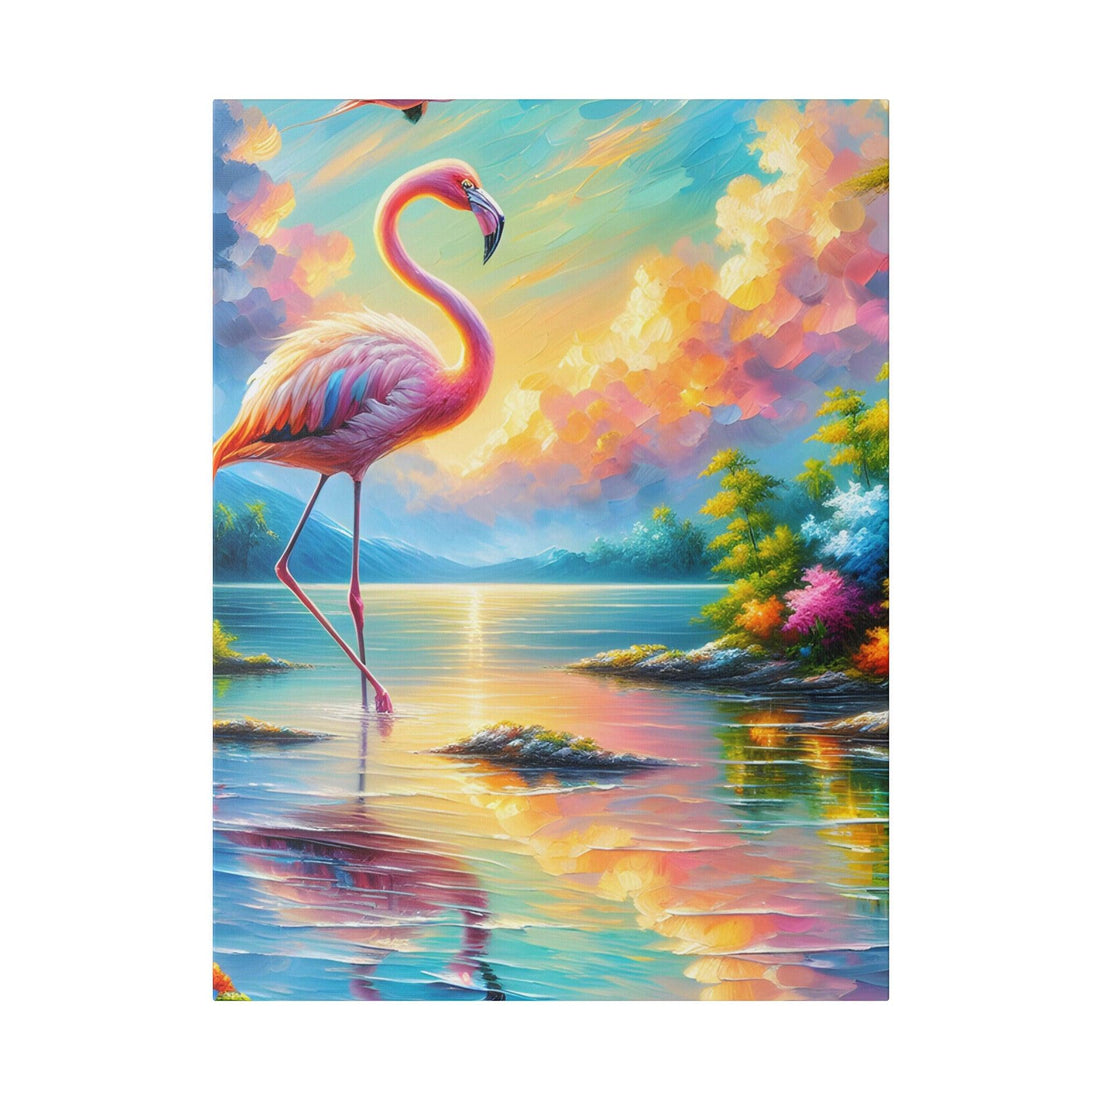 "Flamingo Fantasy Bliss - Canvas Wall Art" - The Alice Gallery